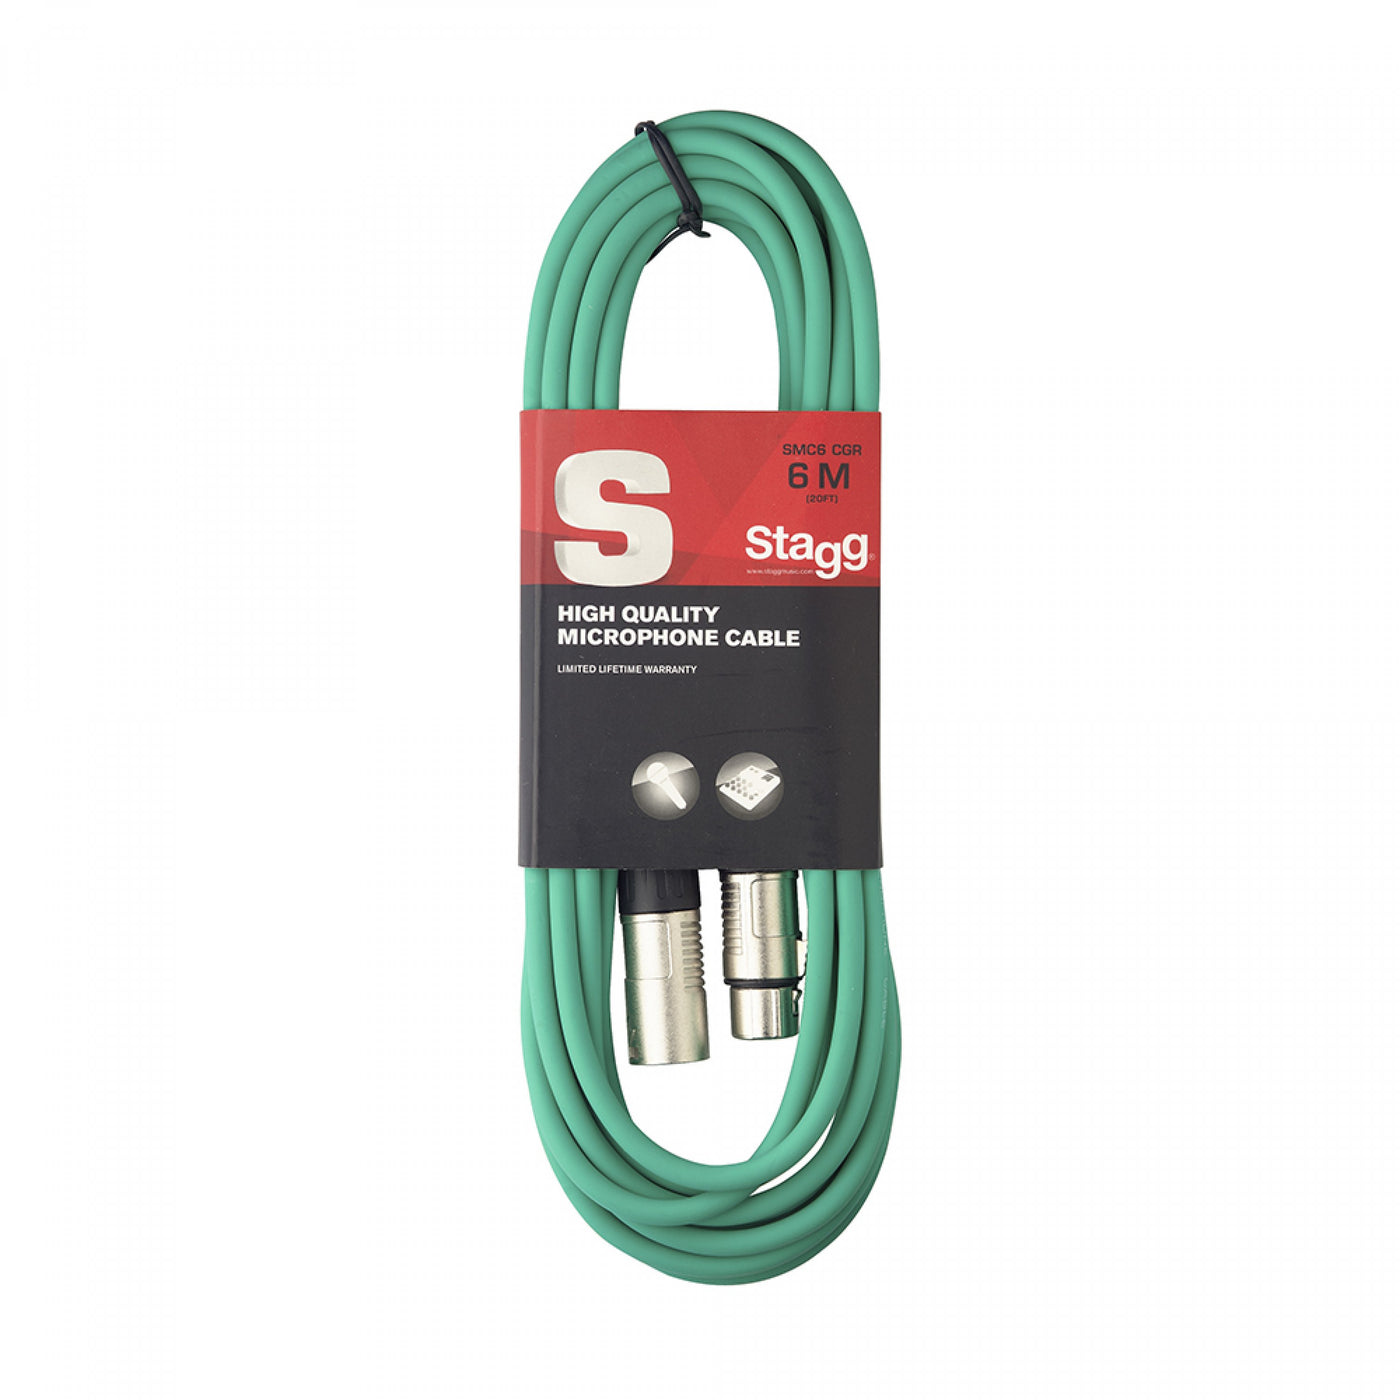 SMC6 CGR 6M Mic Cable Xlr/Xlr, Green